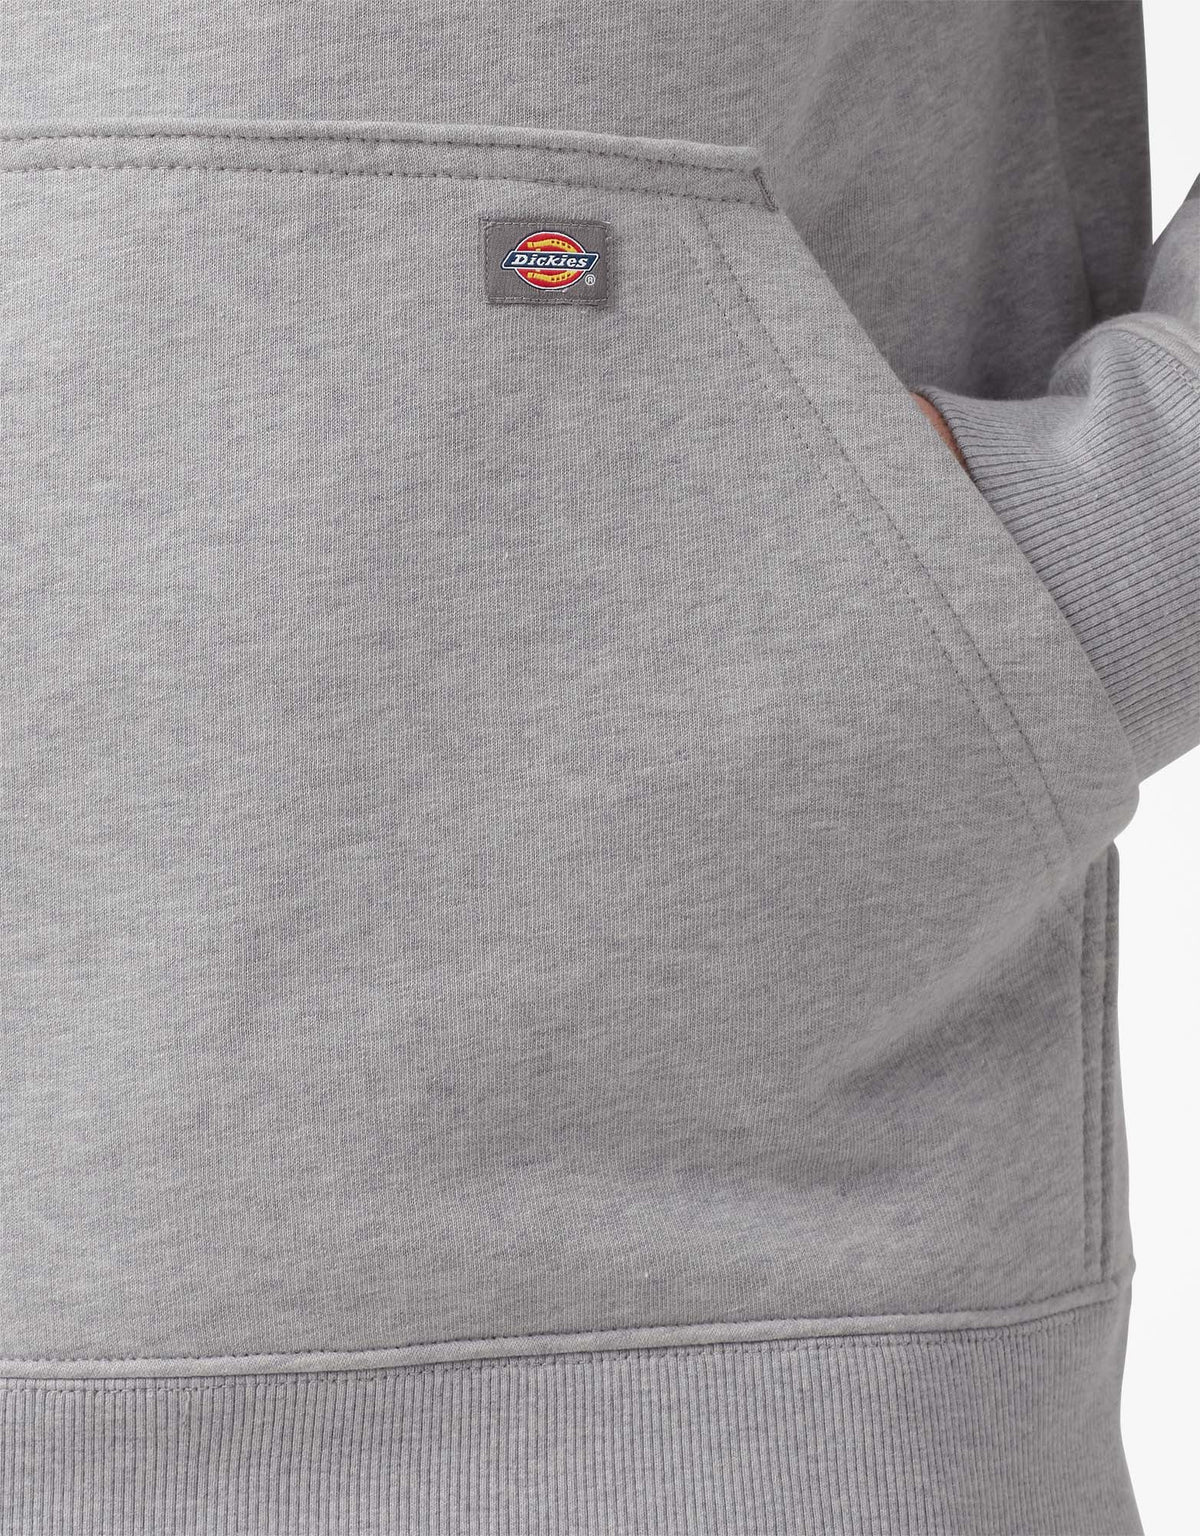 Dickies Wordmark Logo Hooded Sweatshirt - Work World - Workwear, Work Boots, Safety Gear